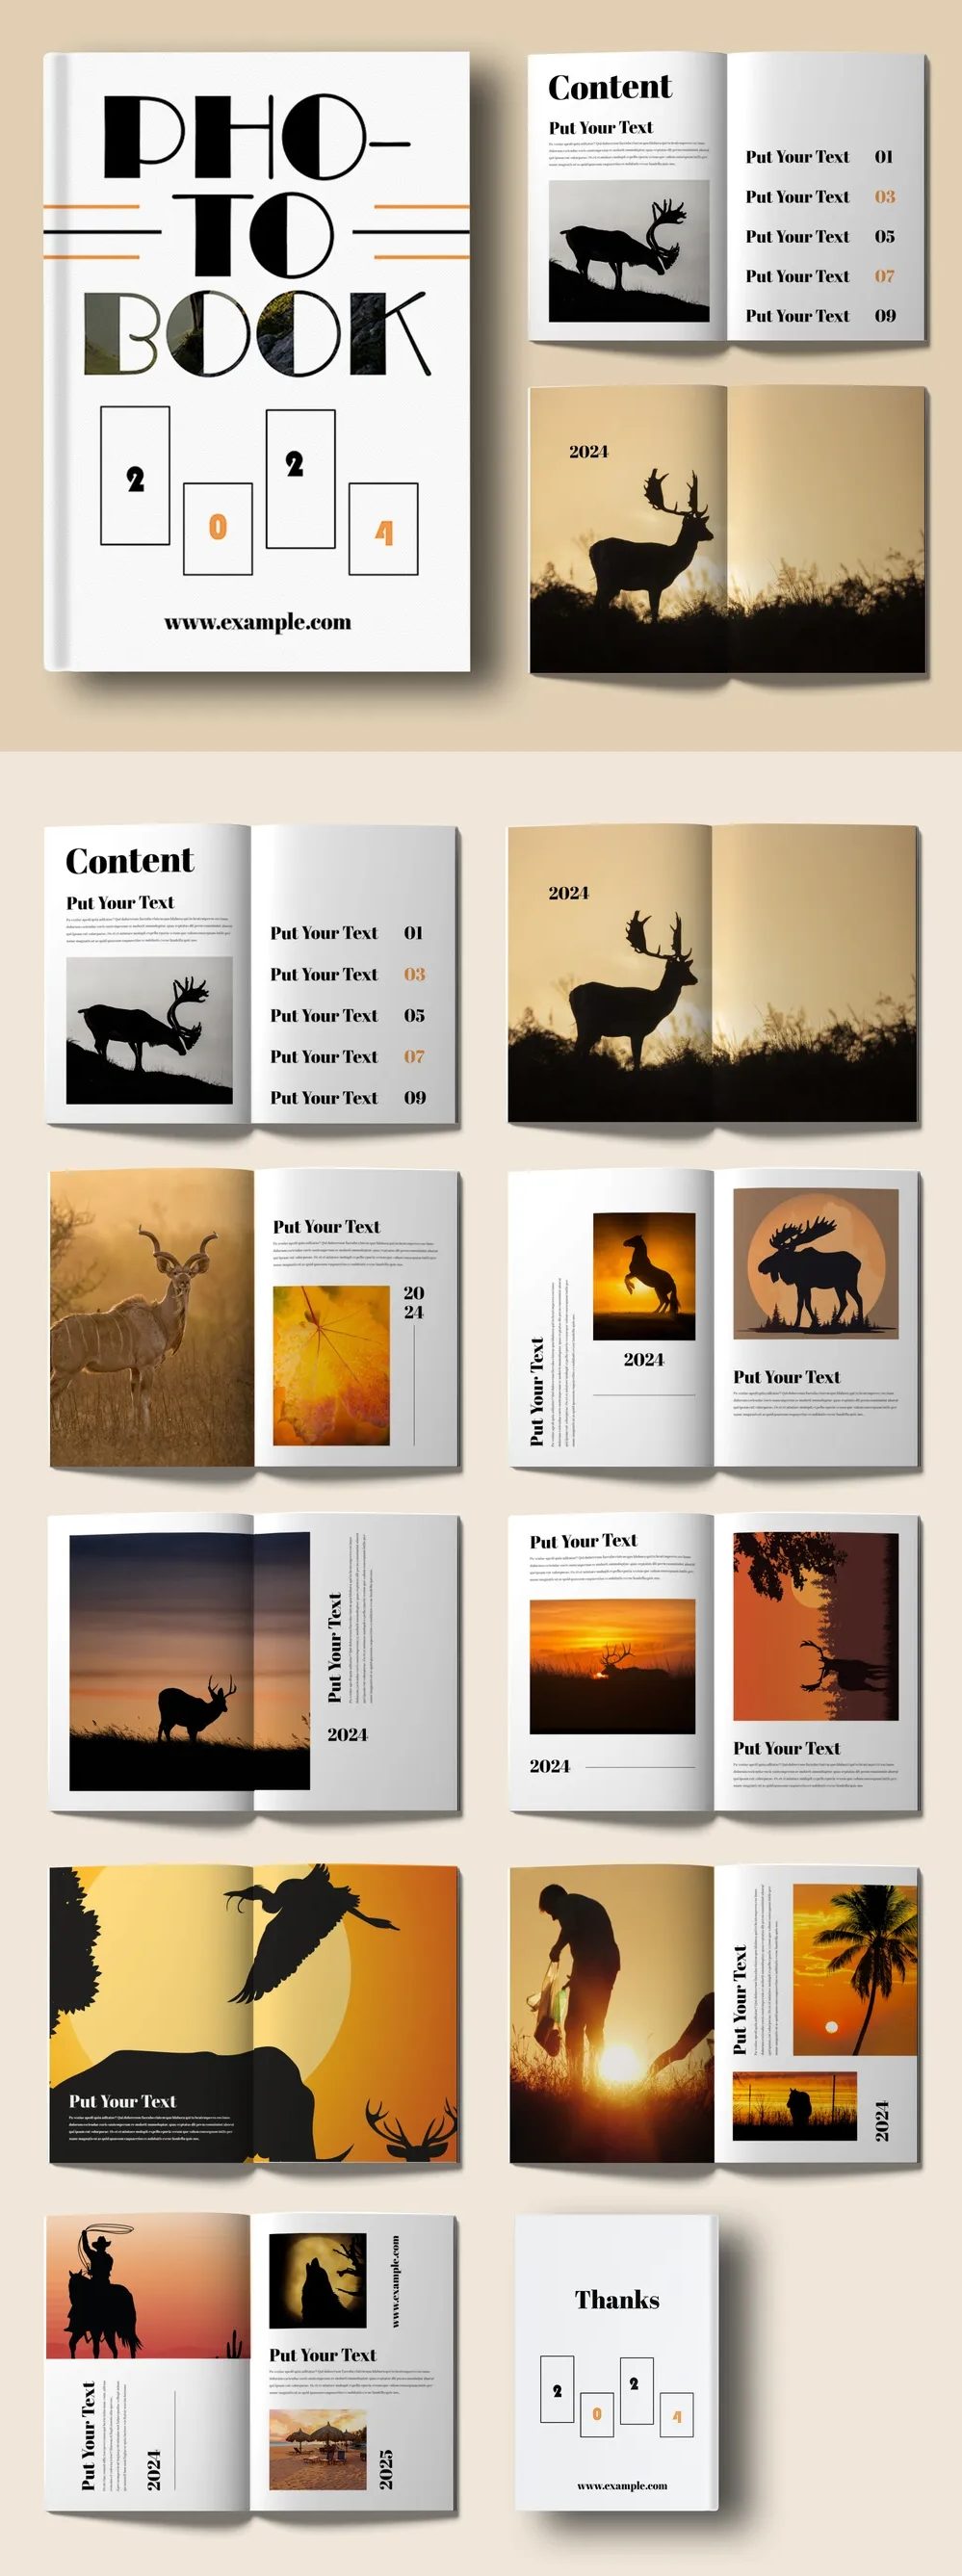 Adobestock - Photo Book Layout 722994396